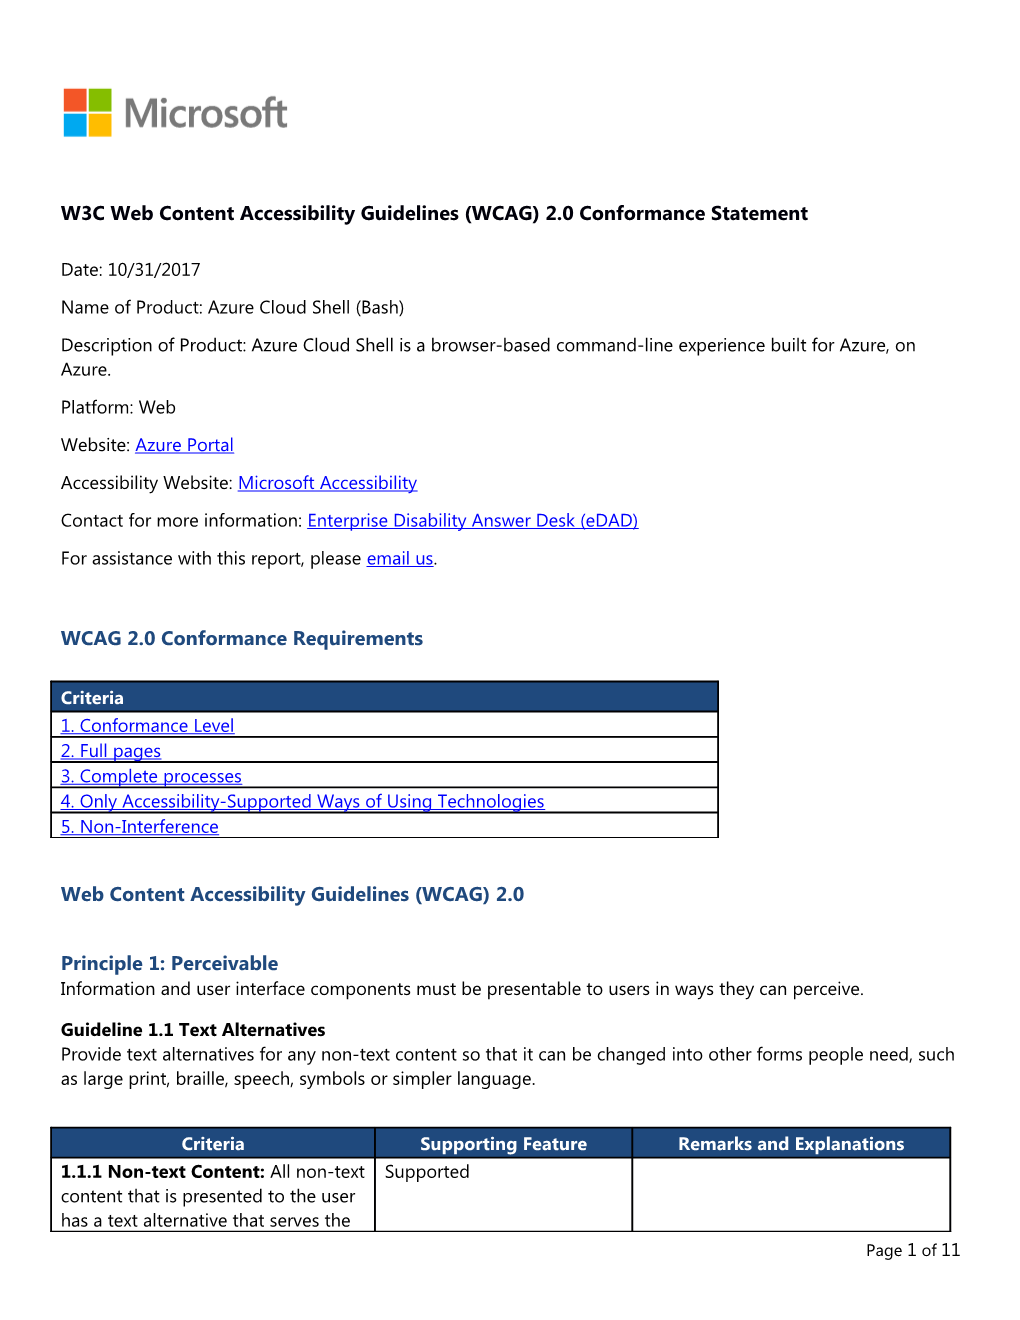 W3C Web Content Accessibility Guidelines (WCAG) 2.0 Conformance Statement s8